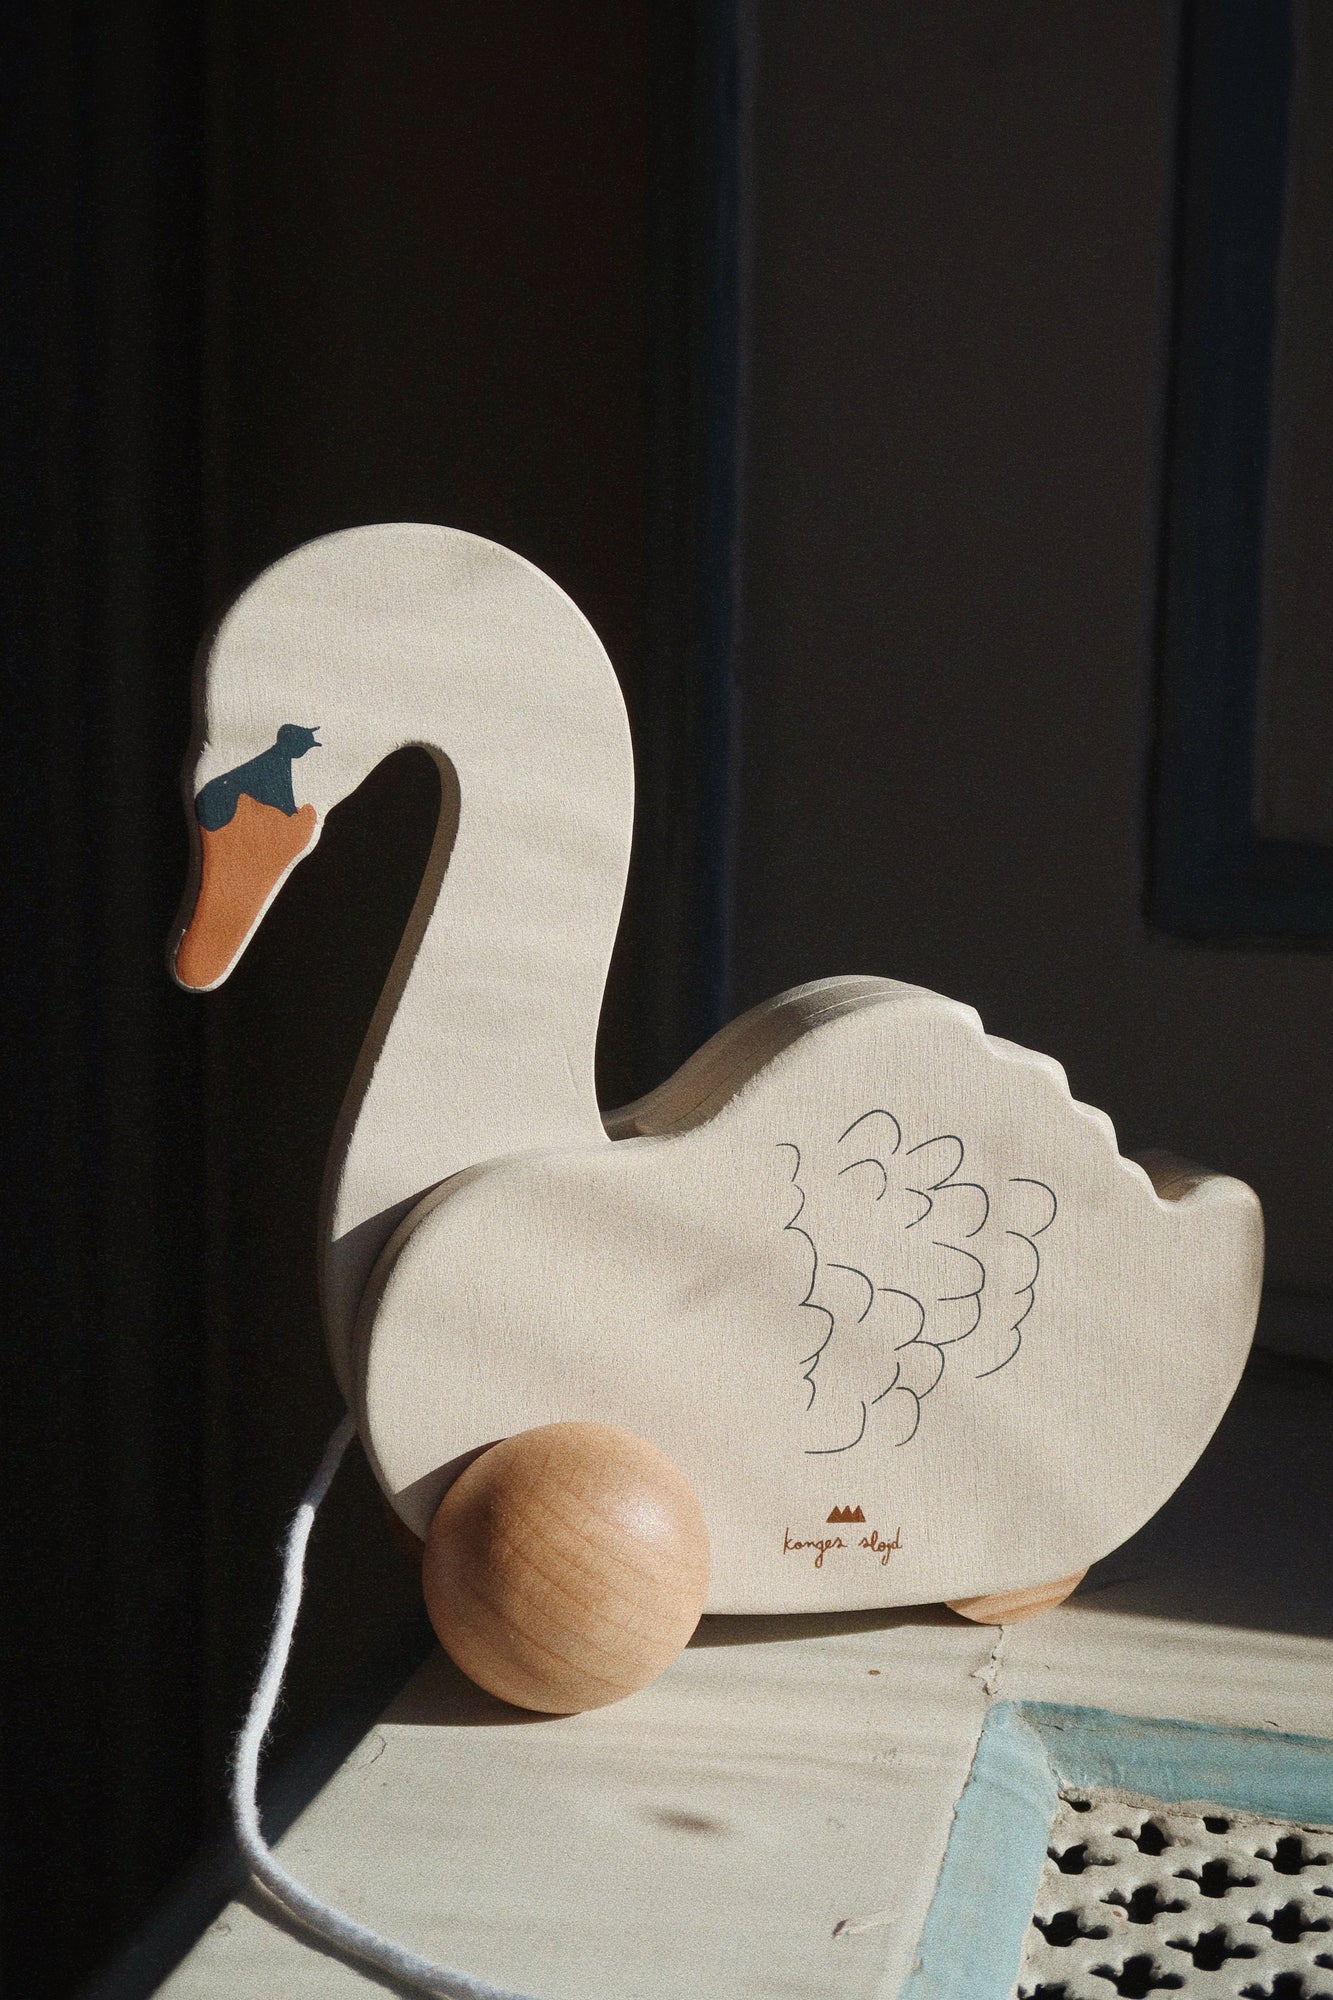 Konges Slojd Doll diaper bag Swan